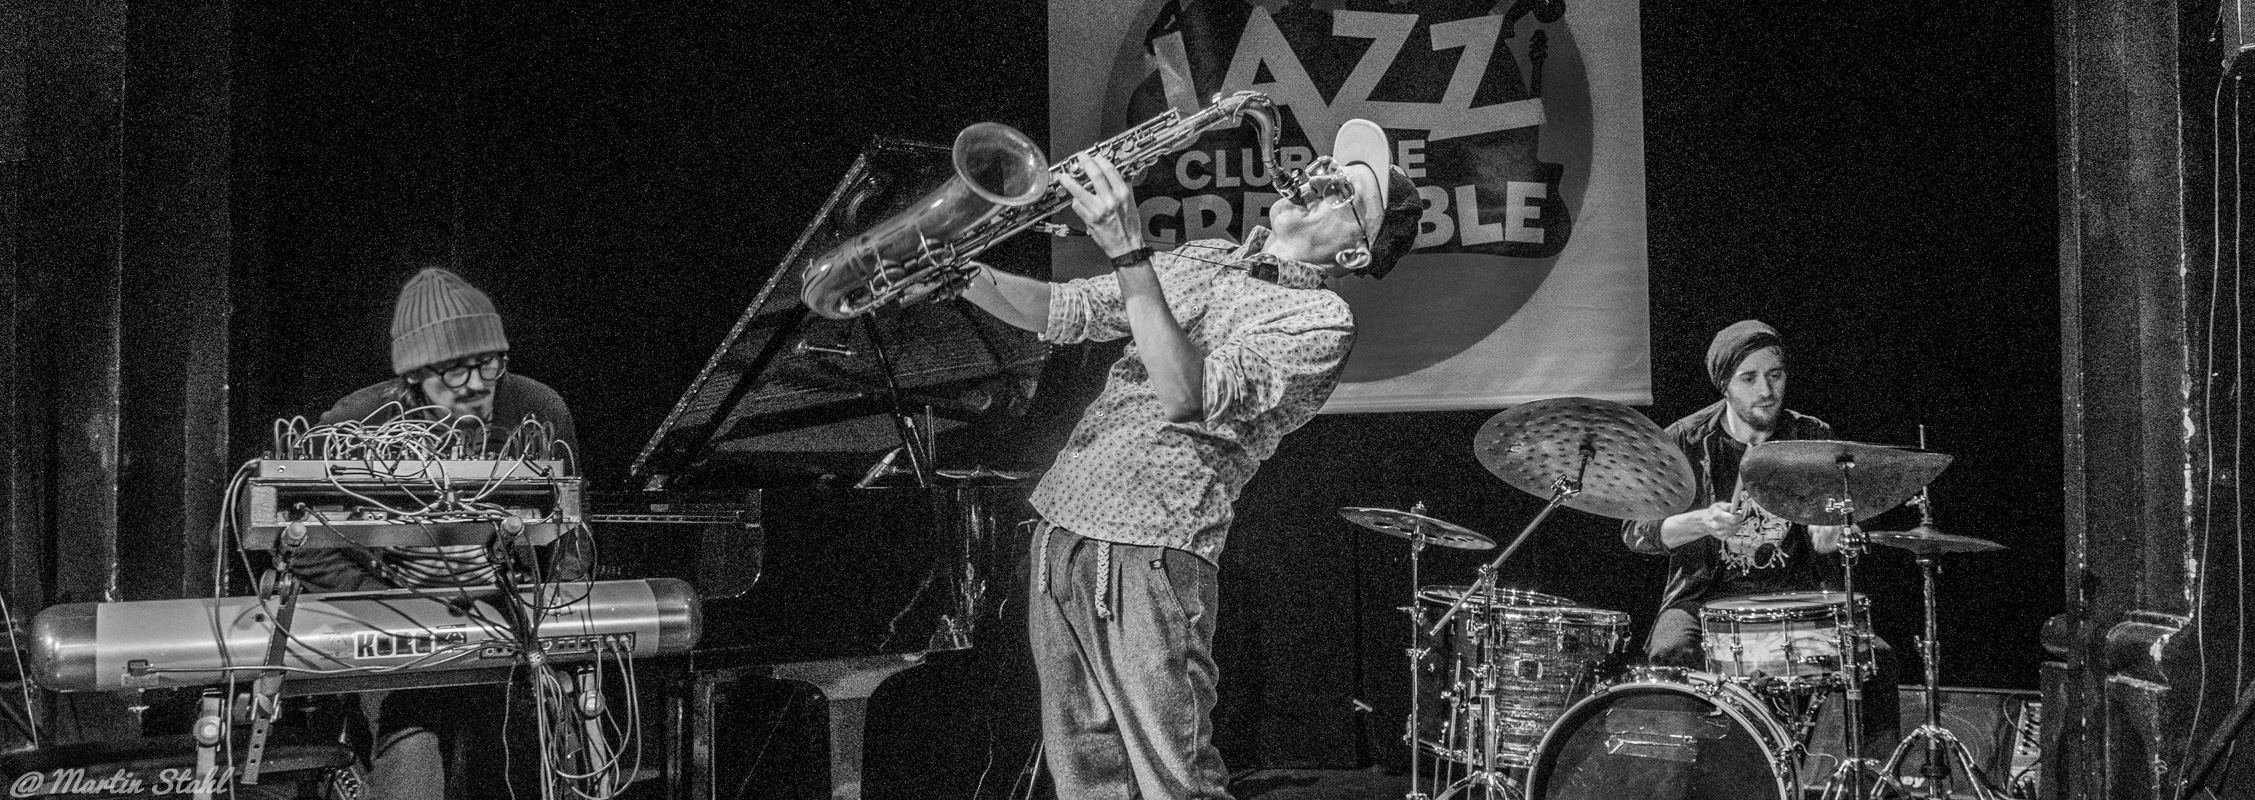 Jazz Club Grenoble